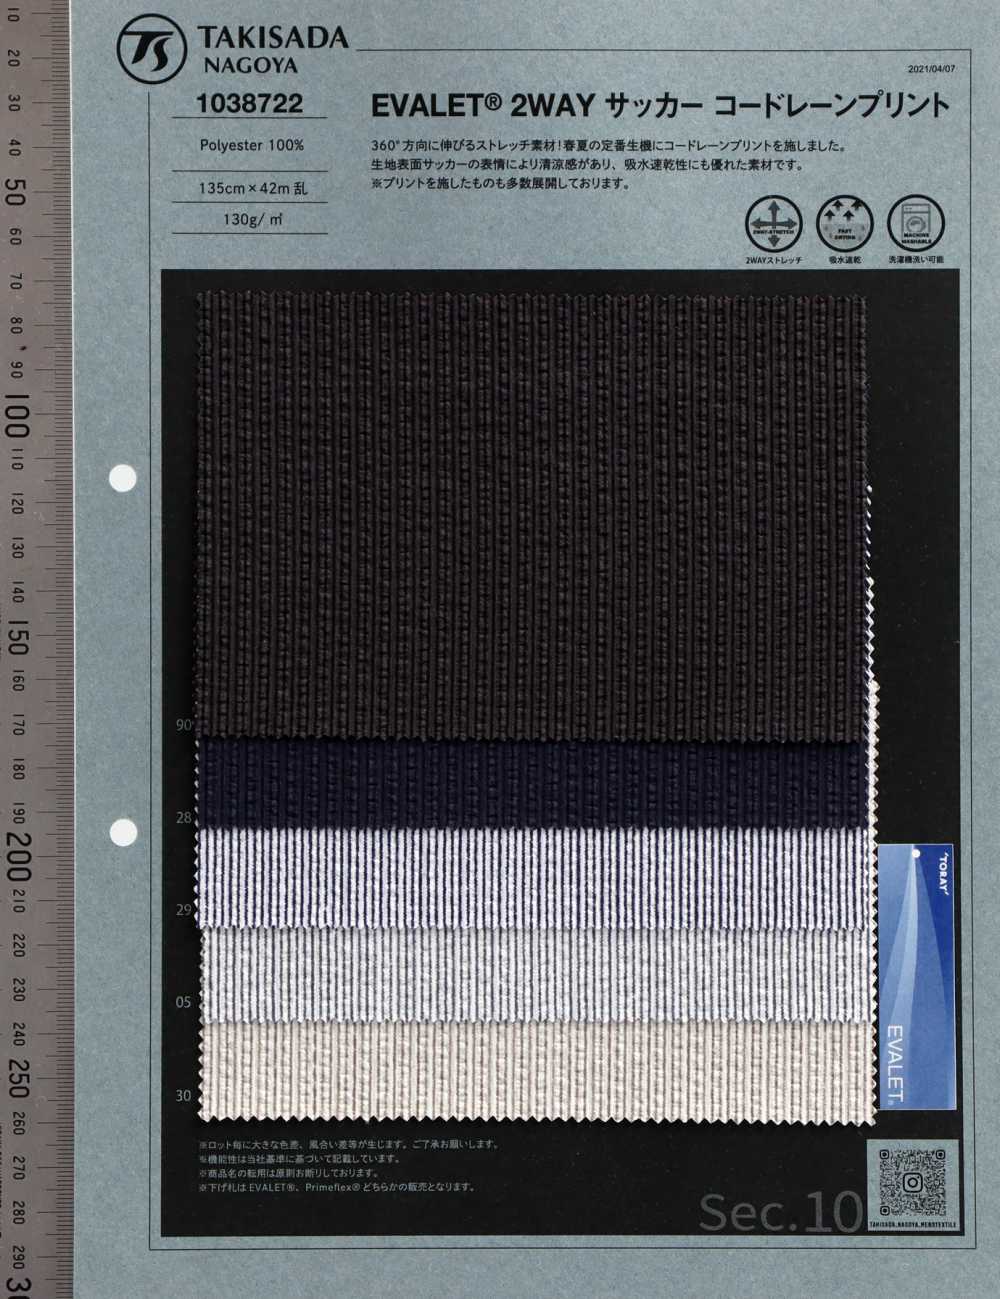 1038722 EVALET® 2WAY Seersucker-Streifenmuster[Textilgewebe] Takisada Nagoya